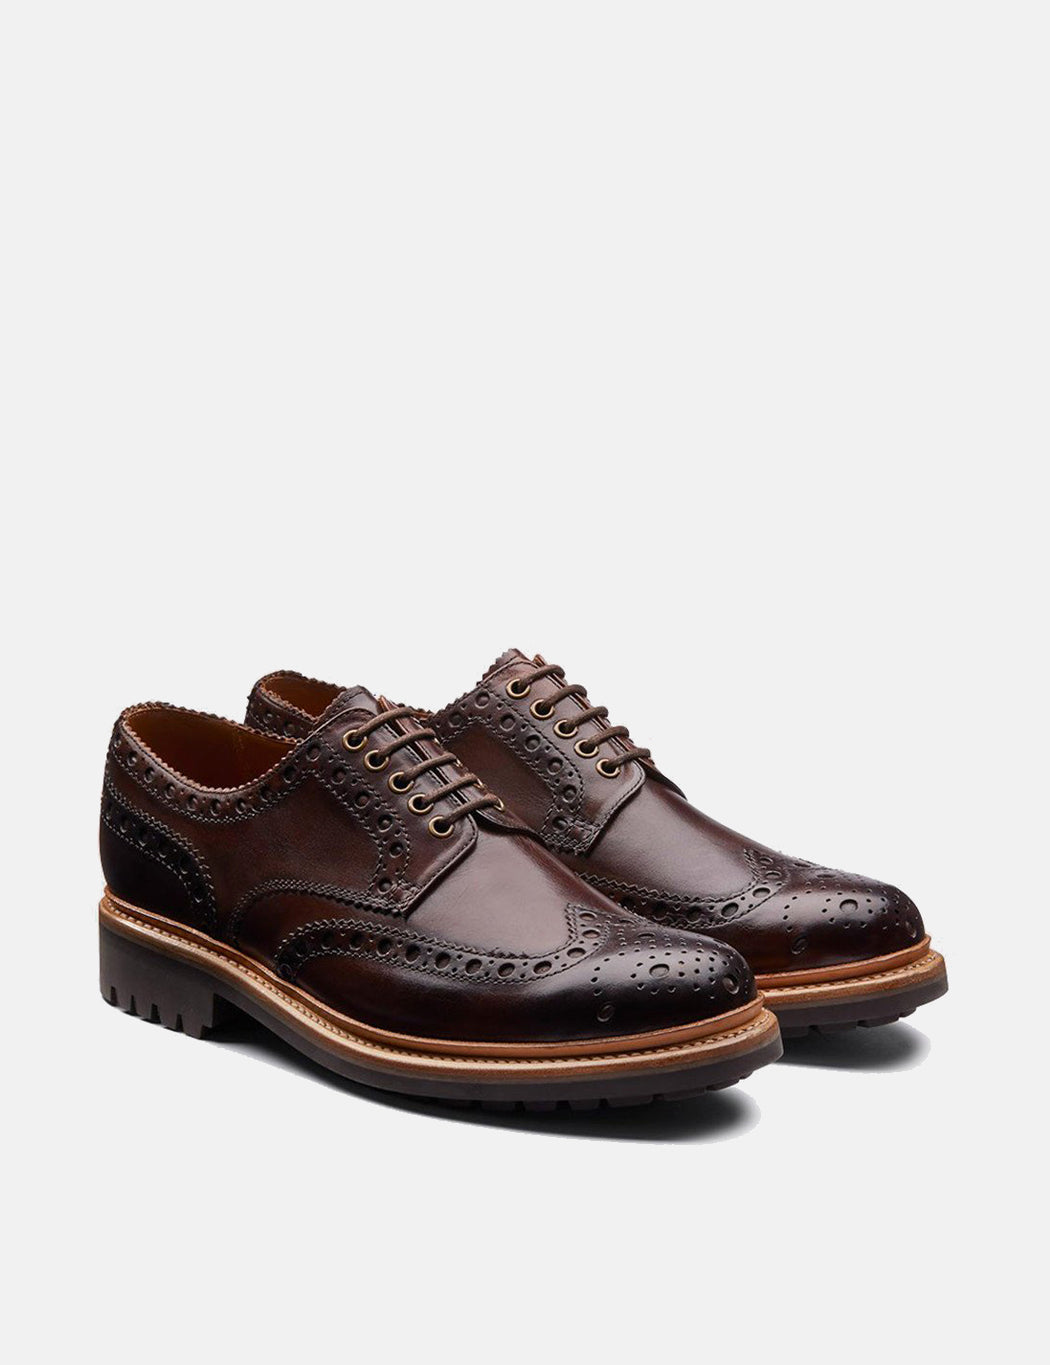 Grenson Archie Brogue Shoes - Dark Brown | URBAN EXCESS.